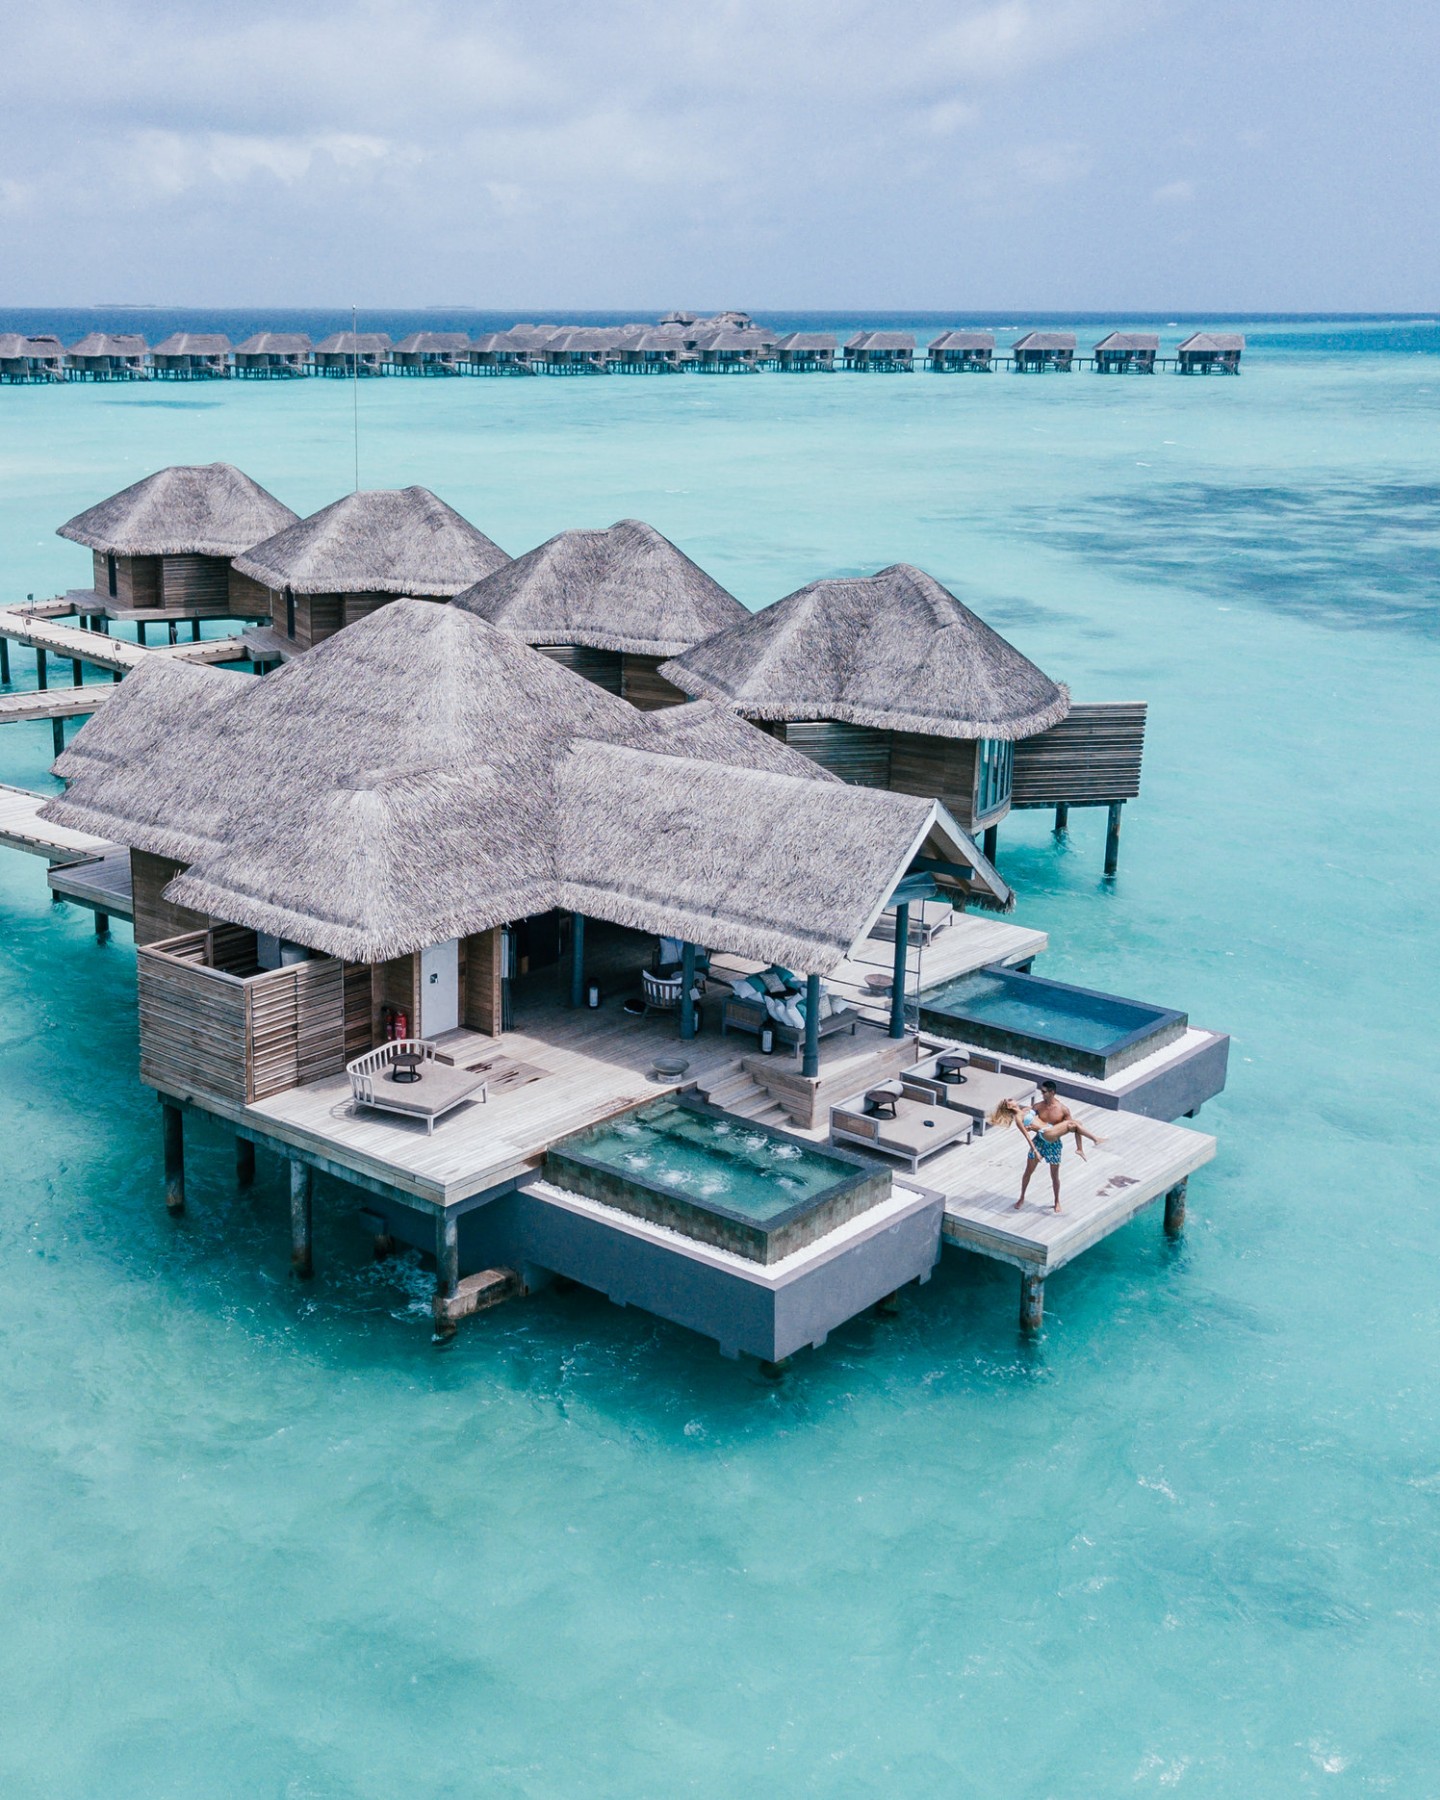 Vakkaru Maldives: Timeless Luxury & Maldivian Style in Idyllic Island Getaway